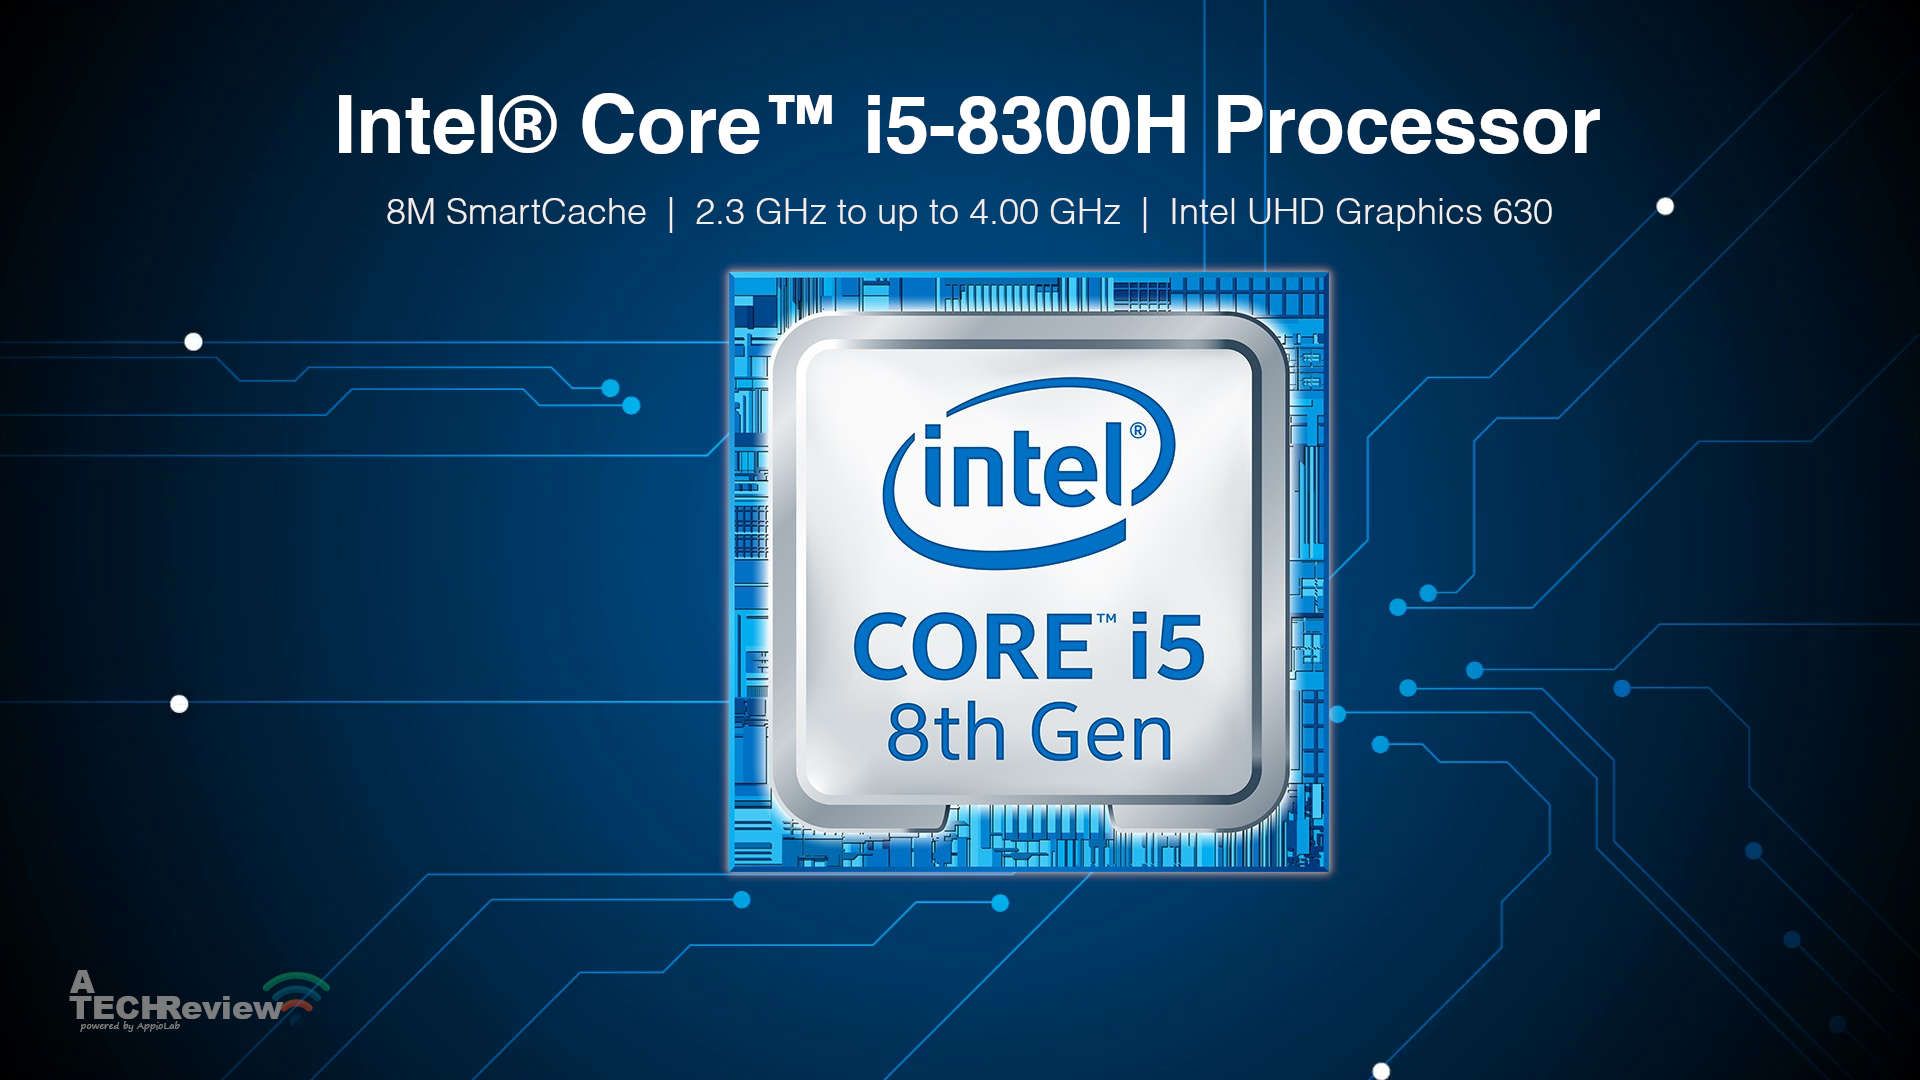 Intel Core i5 Desktop Processors for Gaming